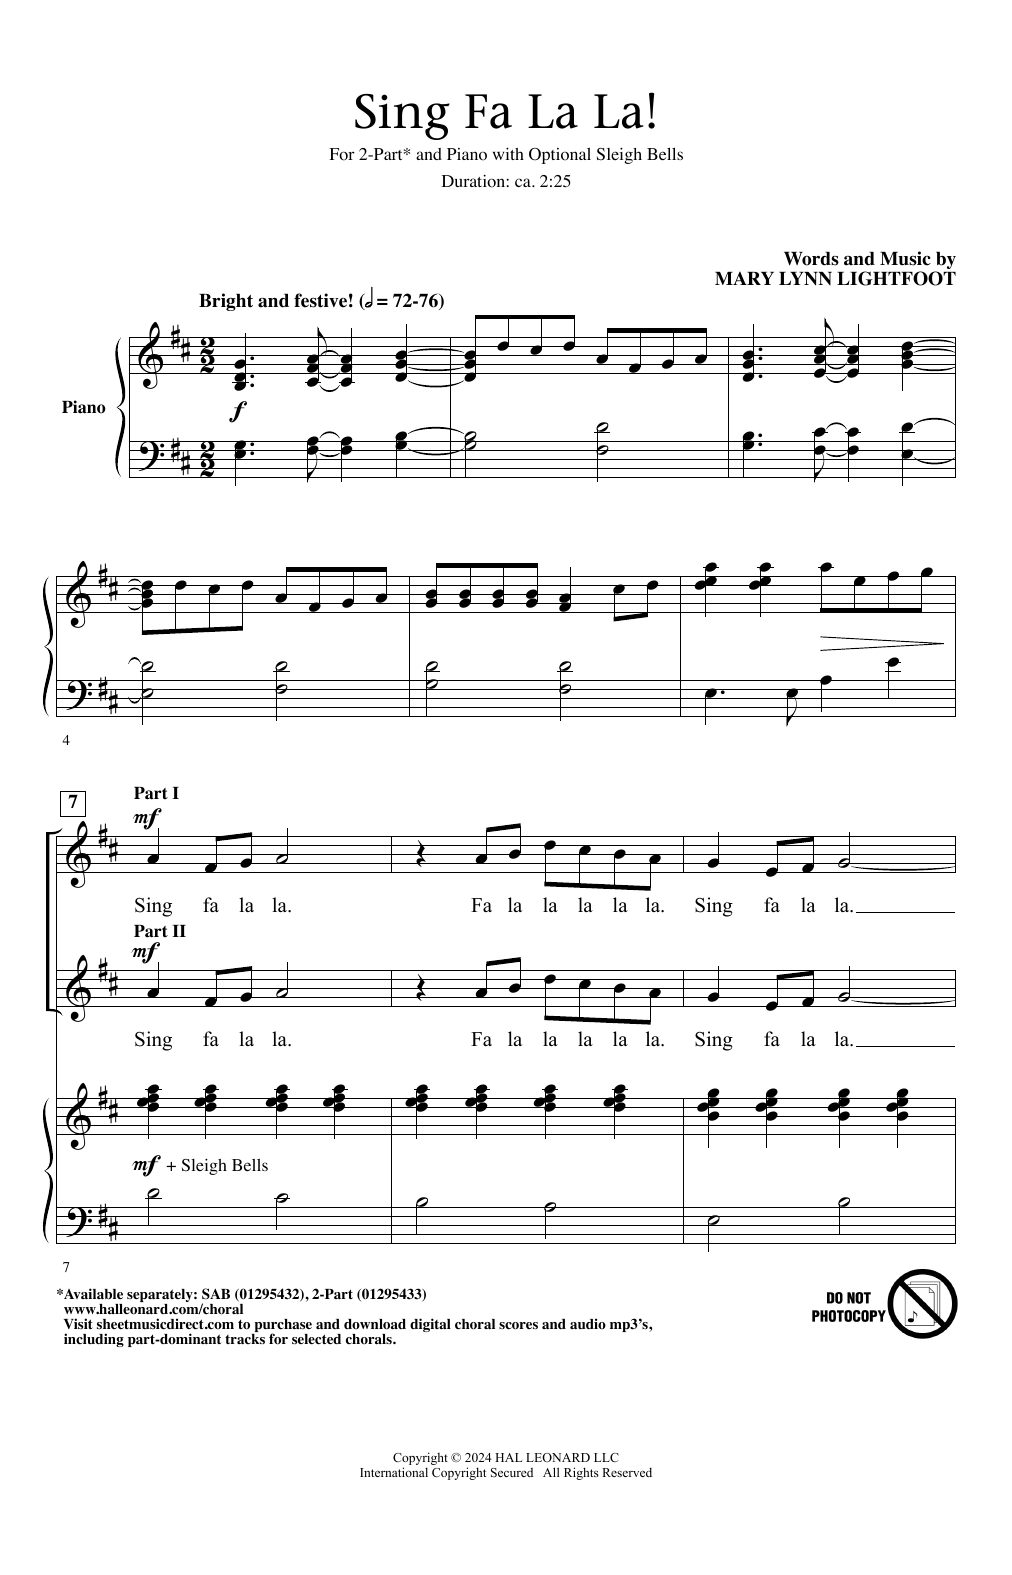 Mary Lynn Lightfoot Sing Fa La La! sheet music notes and chords arranged for SAB Choir